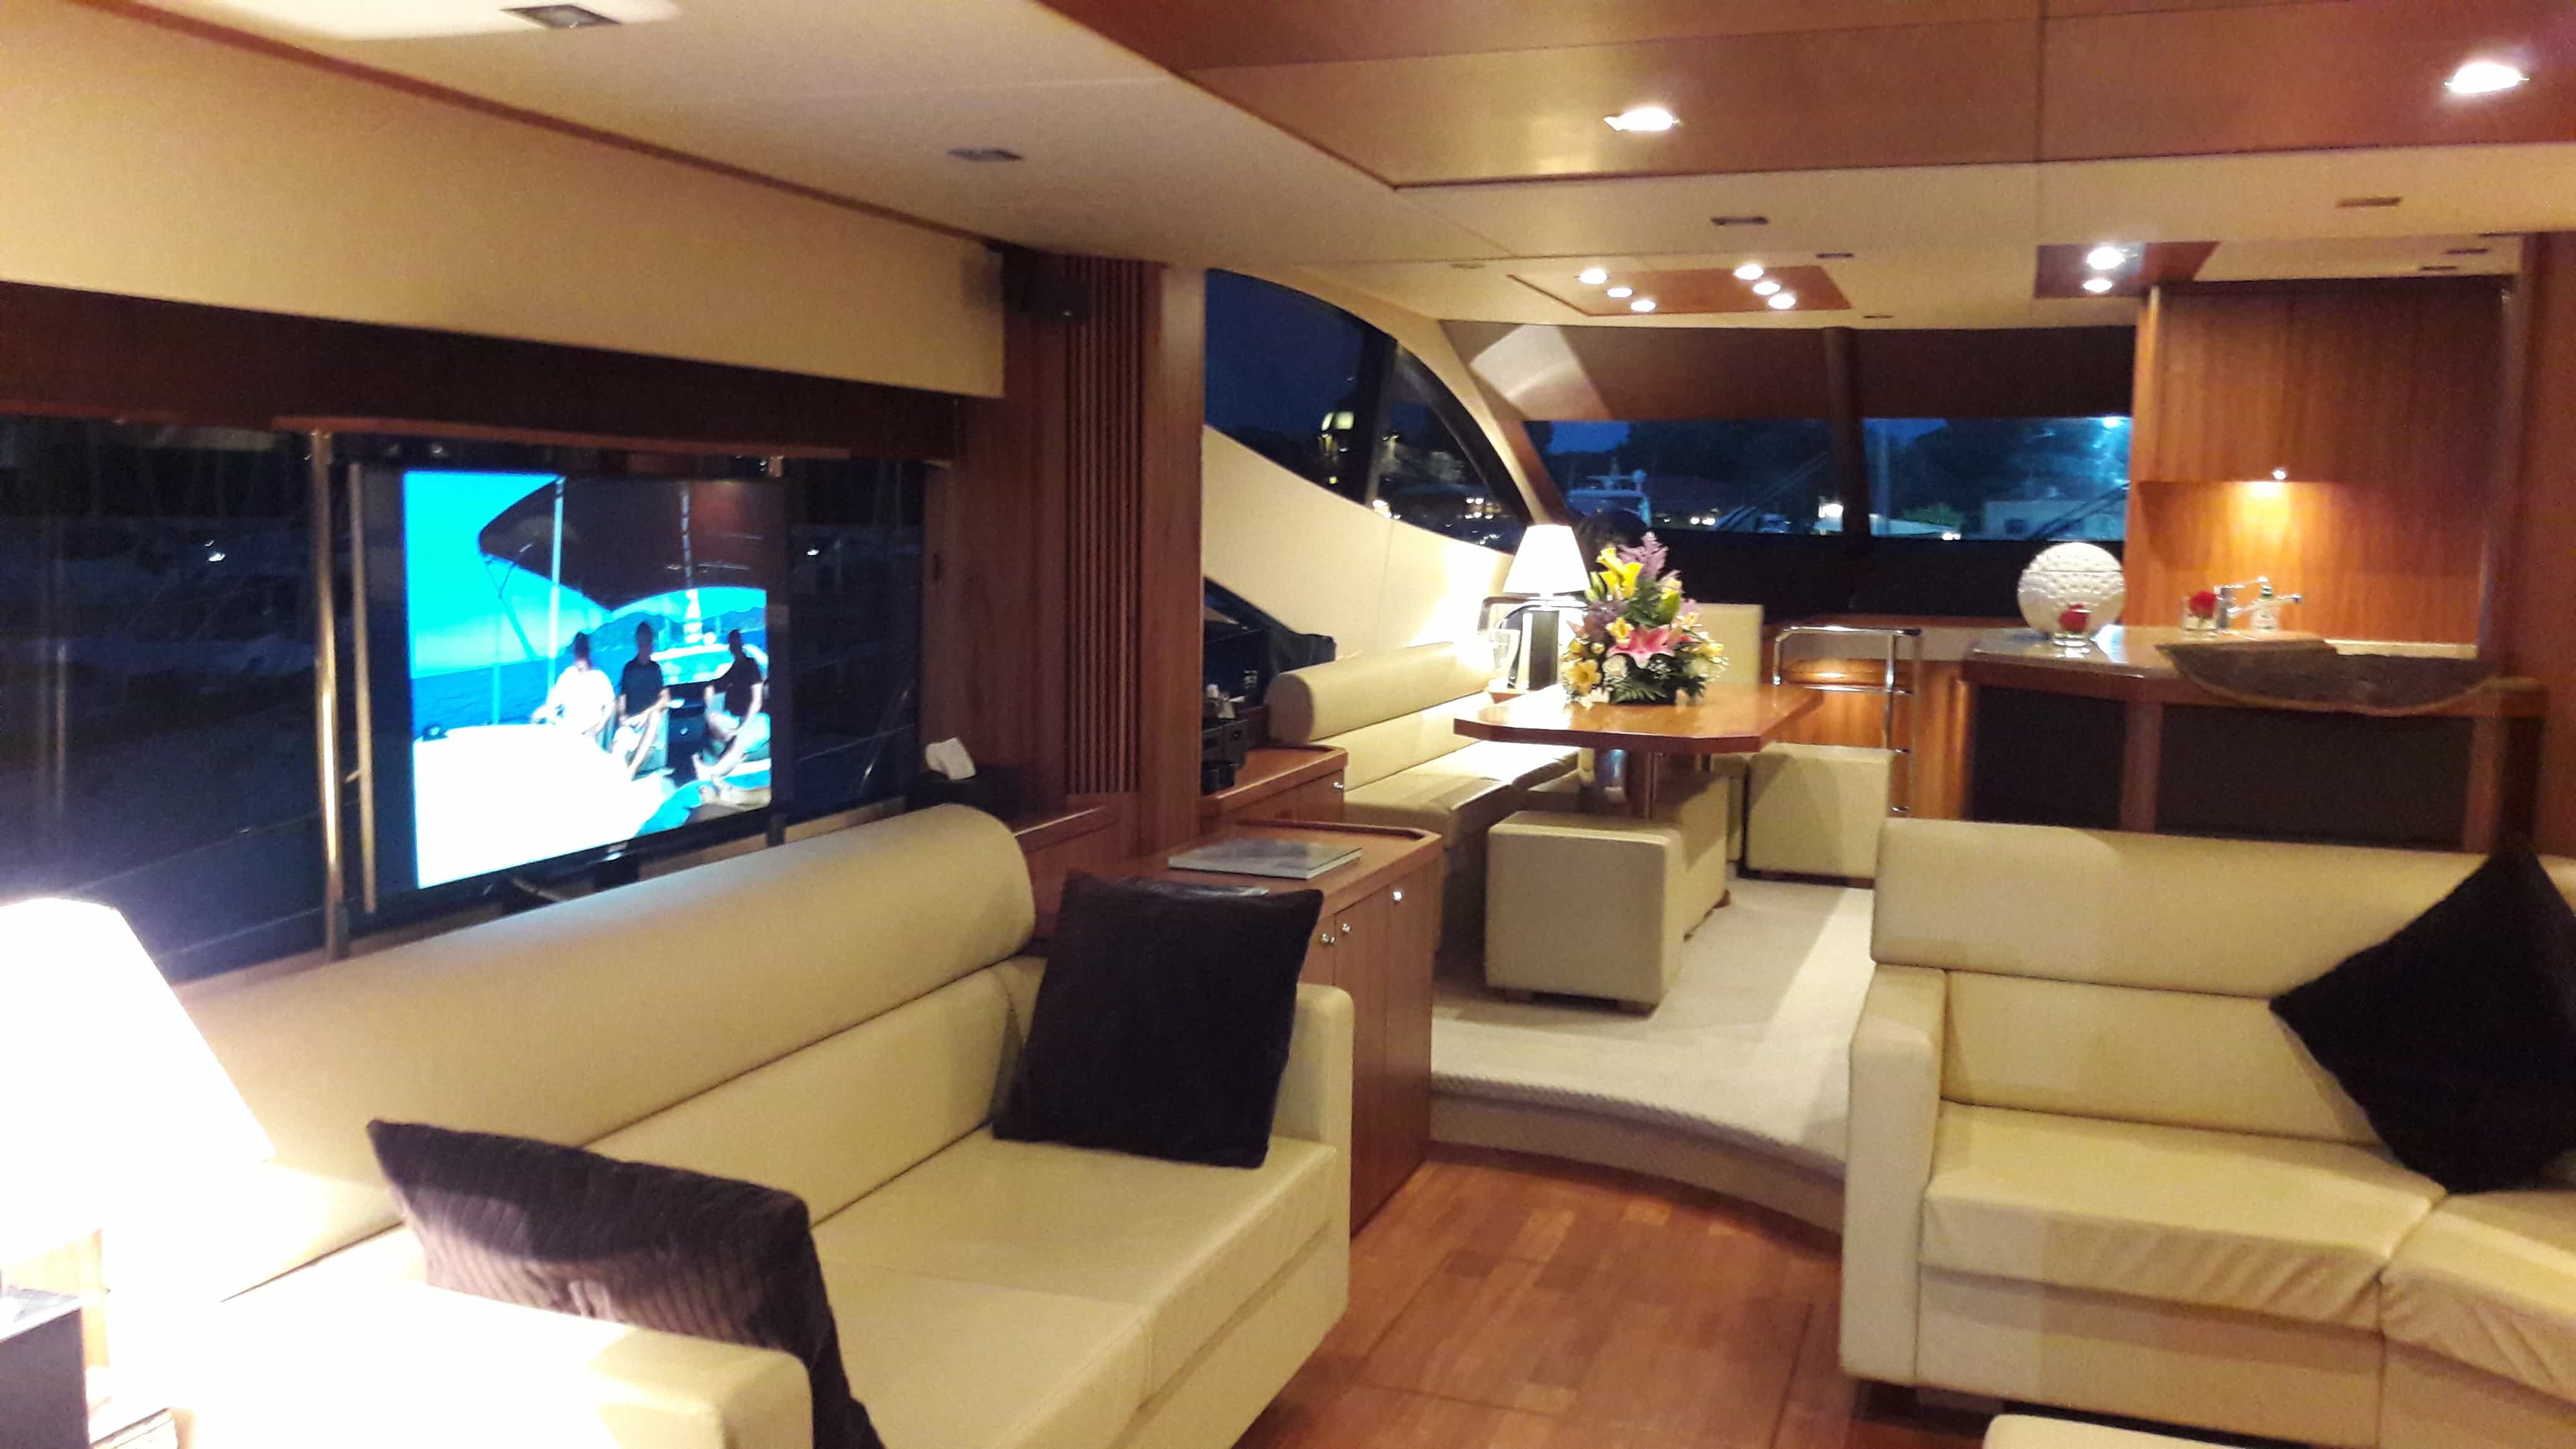 Living Room Inside a Yacht